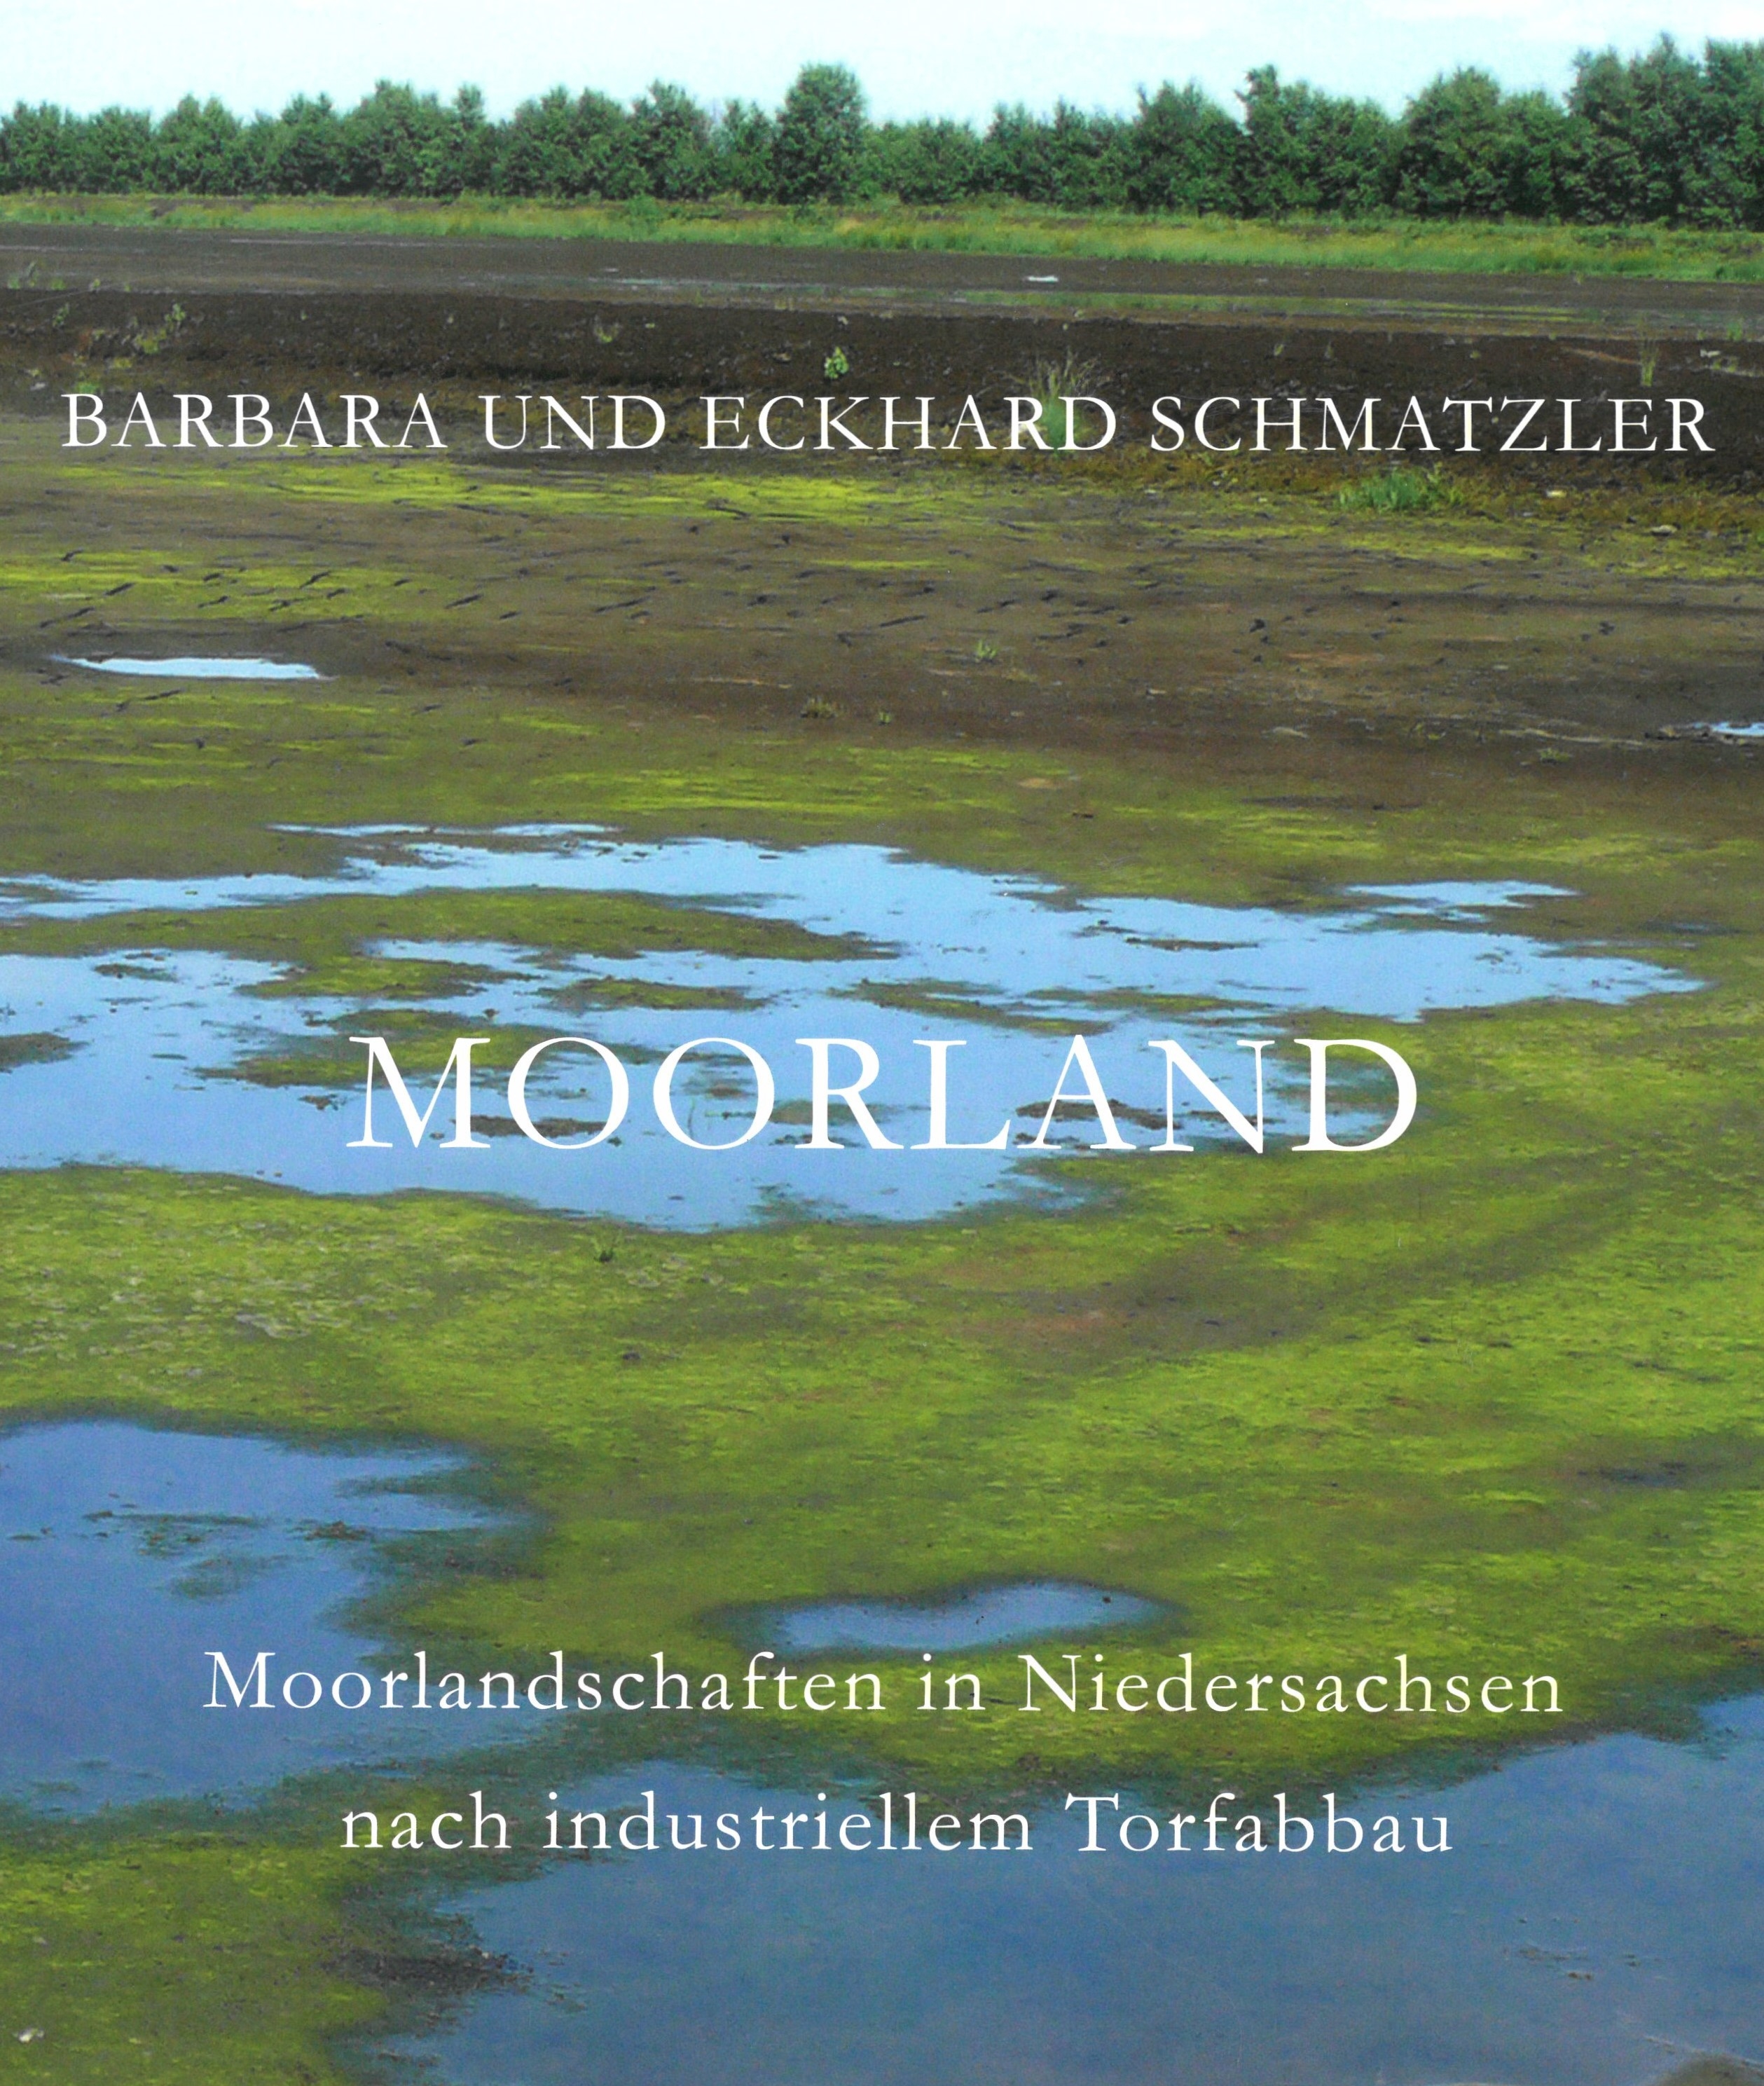 Cover des Buchs "Moorland" (Schmatzler & Schmatzler 2010)